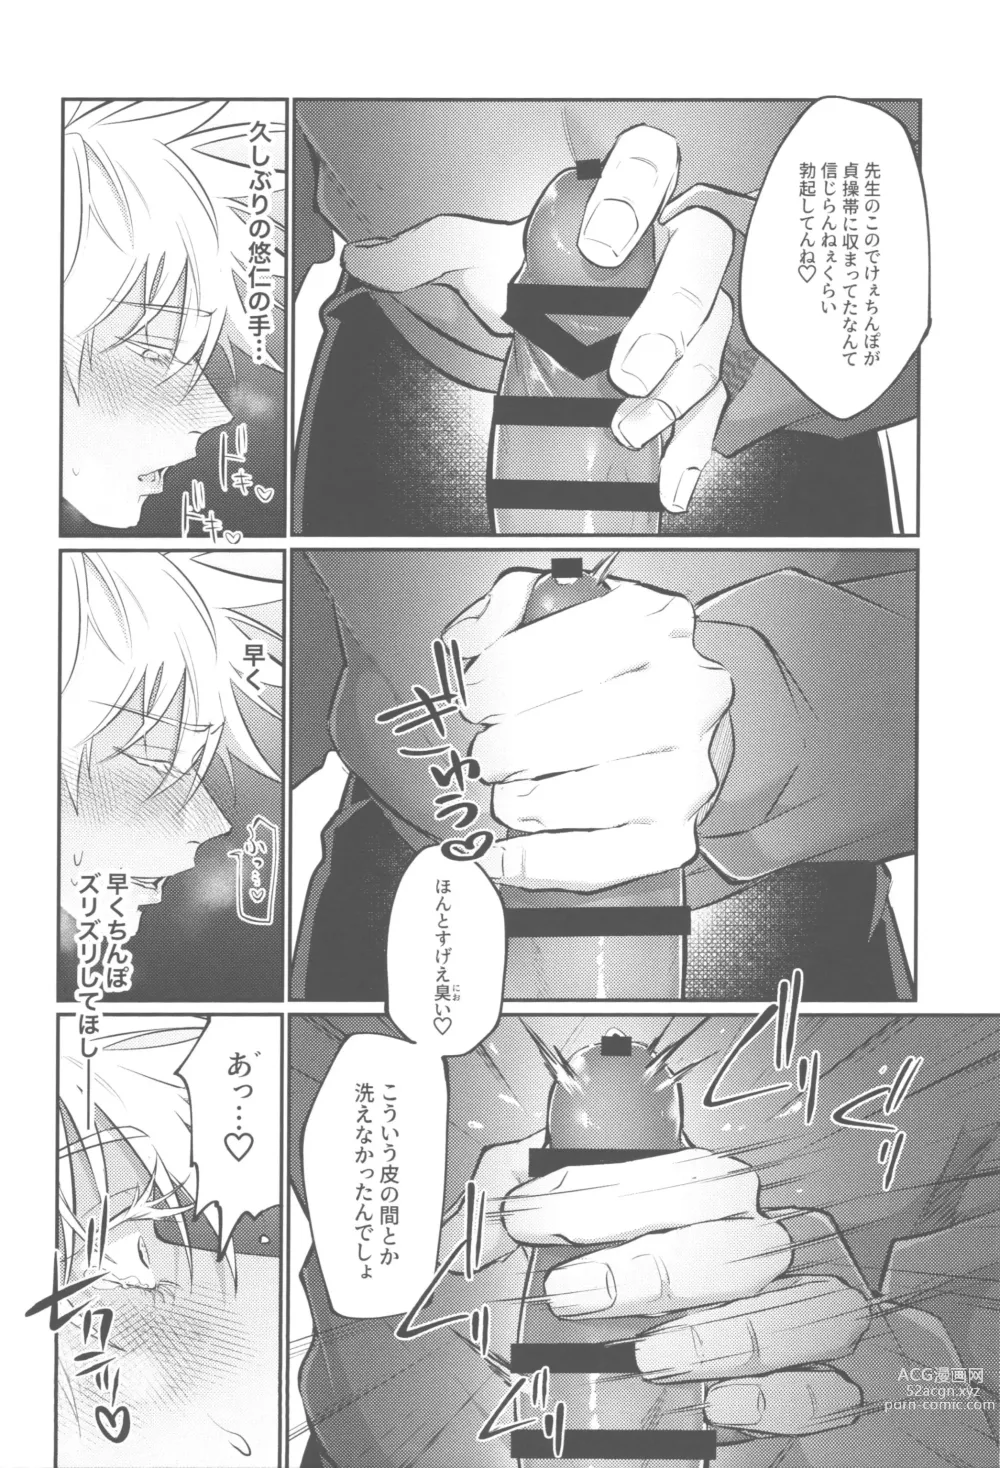 Page 10 of doujinshi Mune no Uchi Seiippai